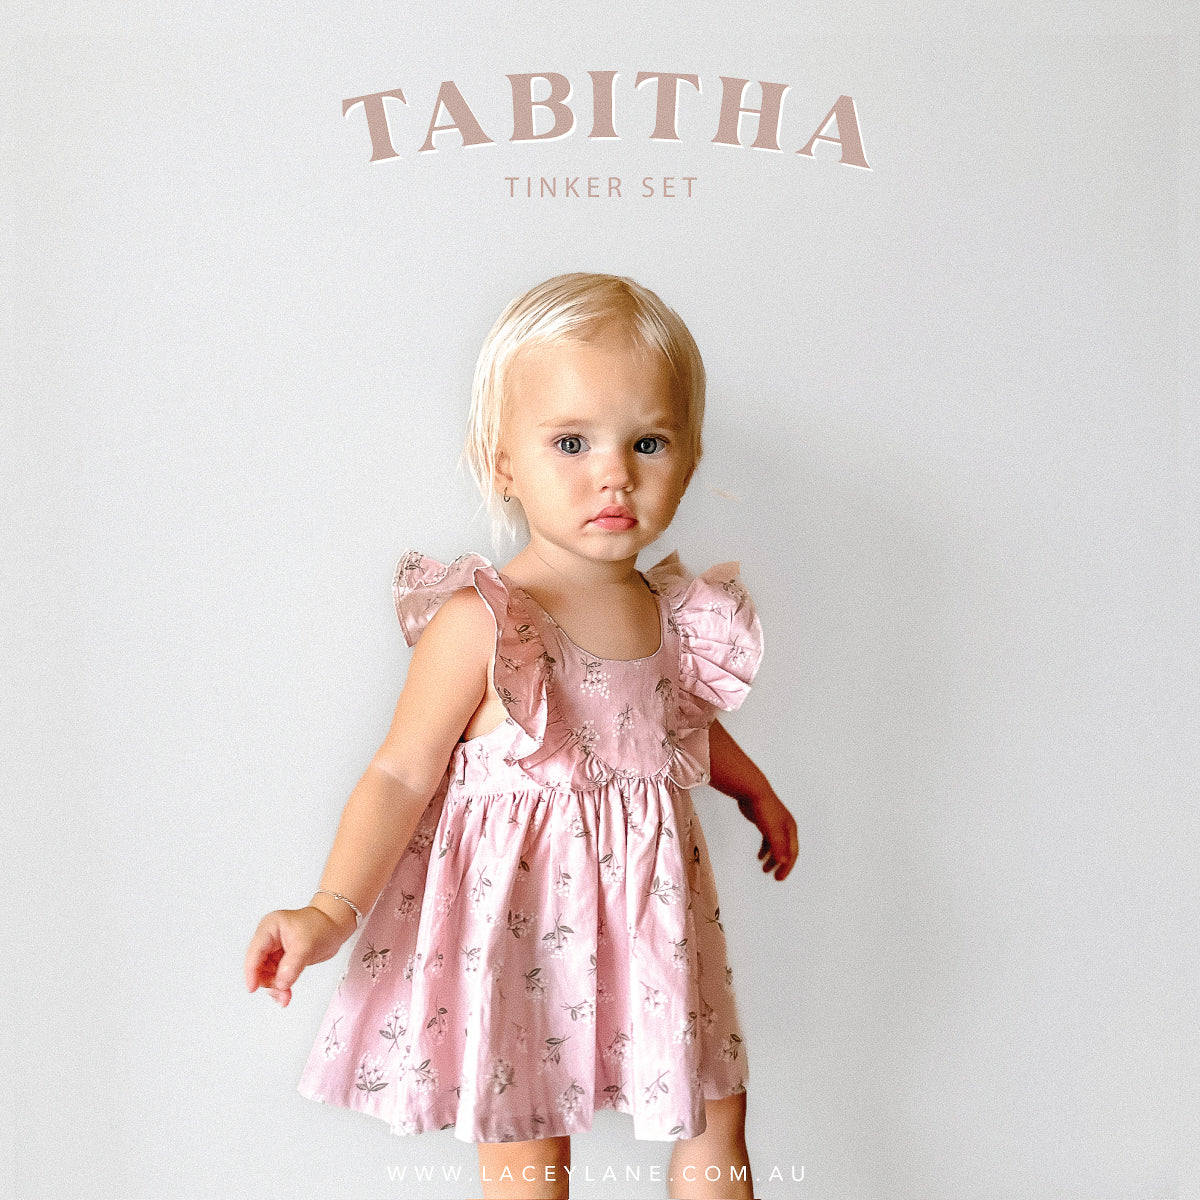 Tabitha Tinker Set